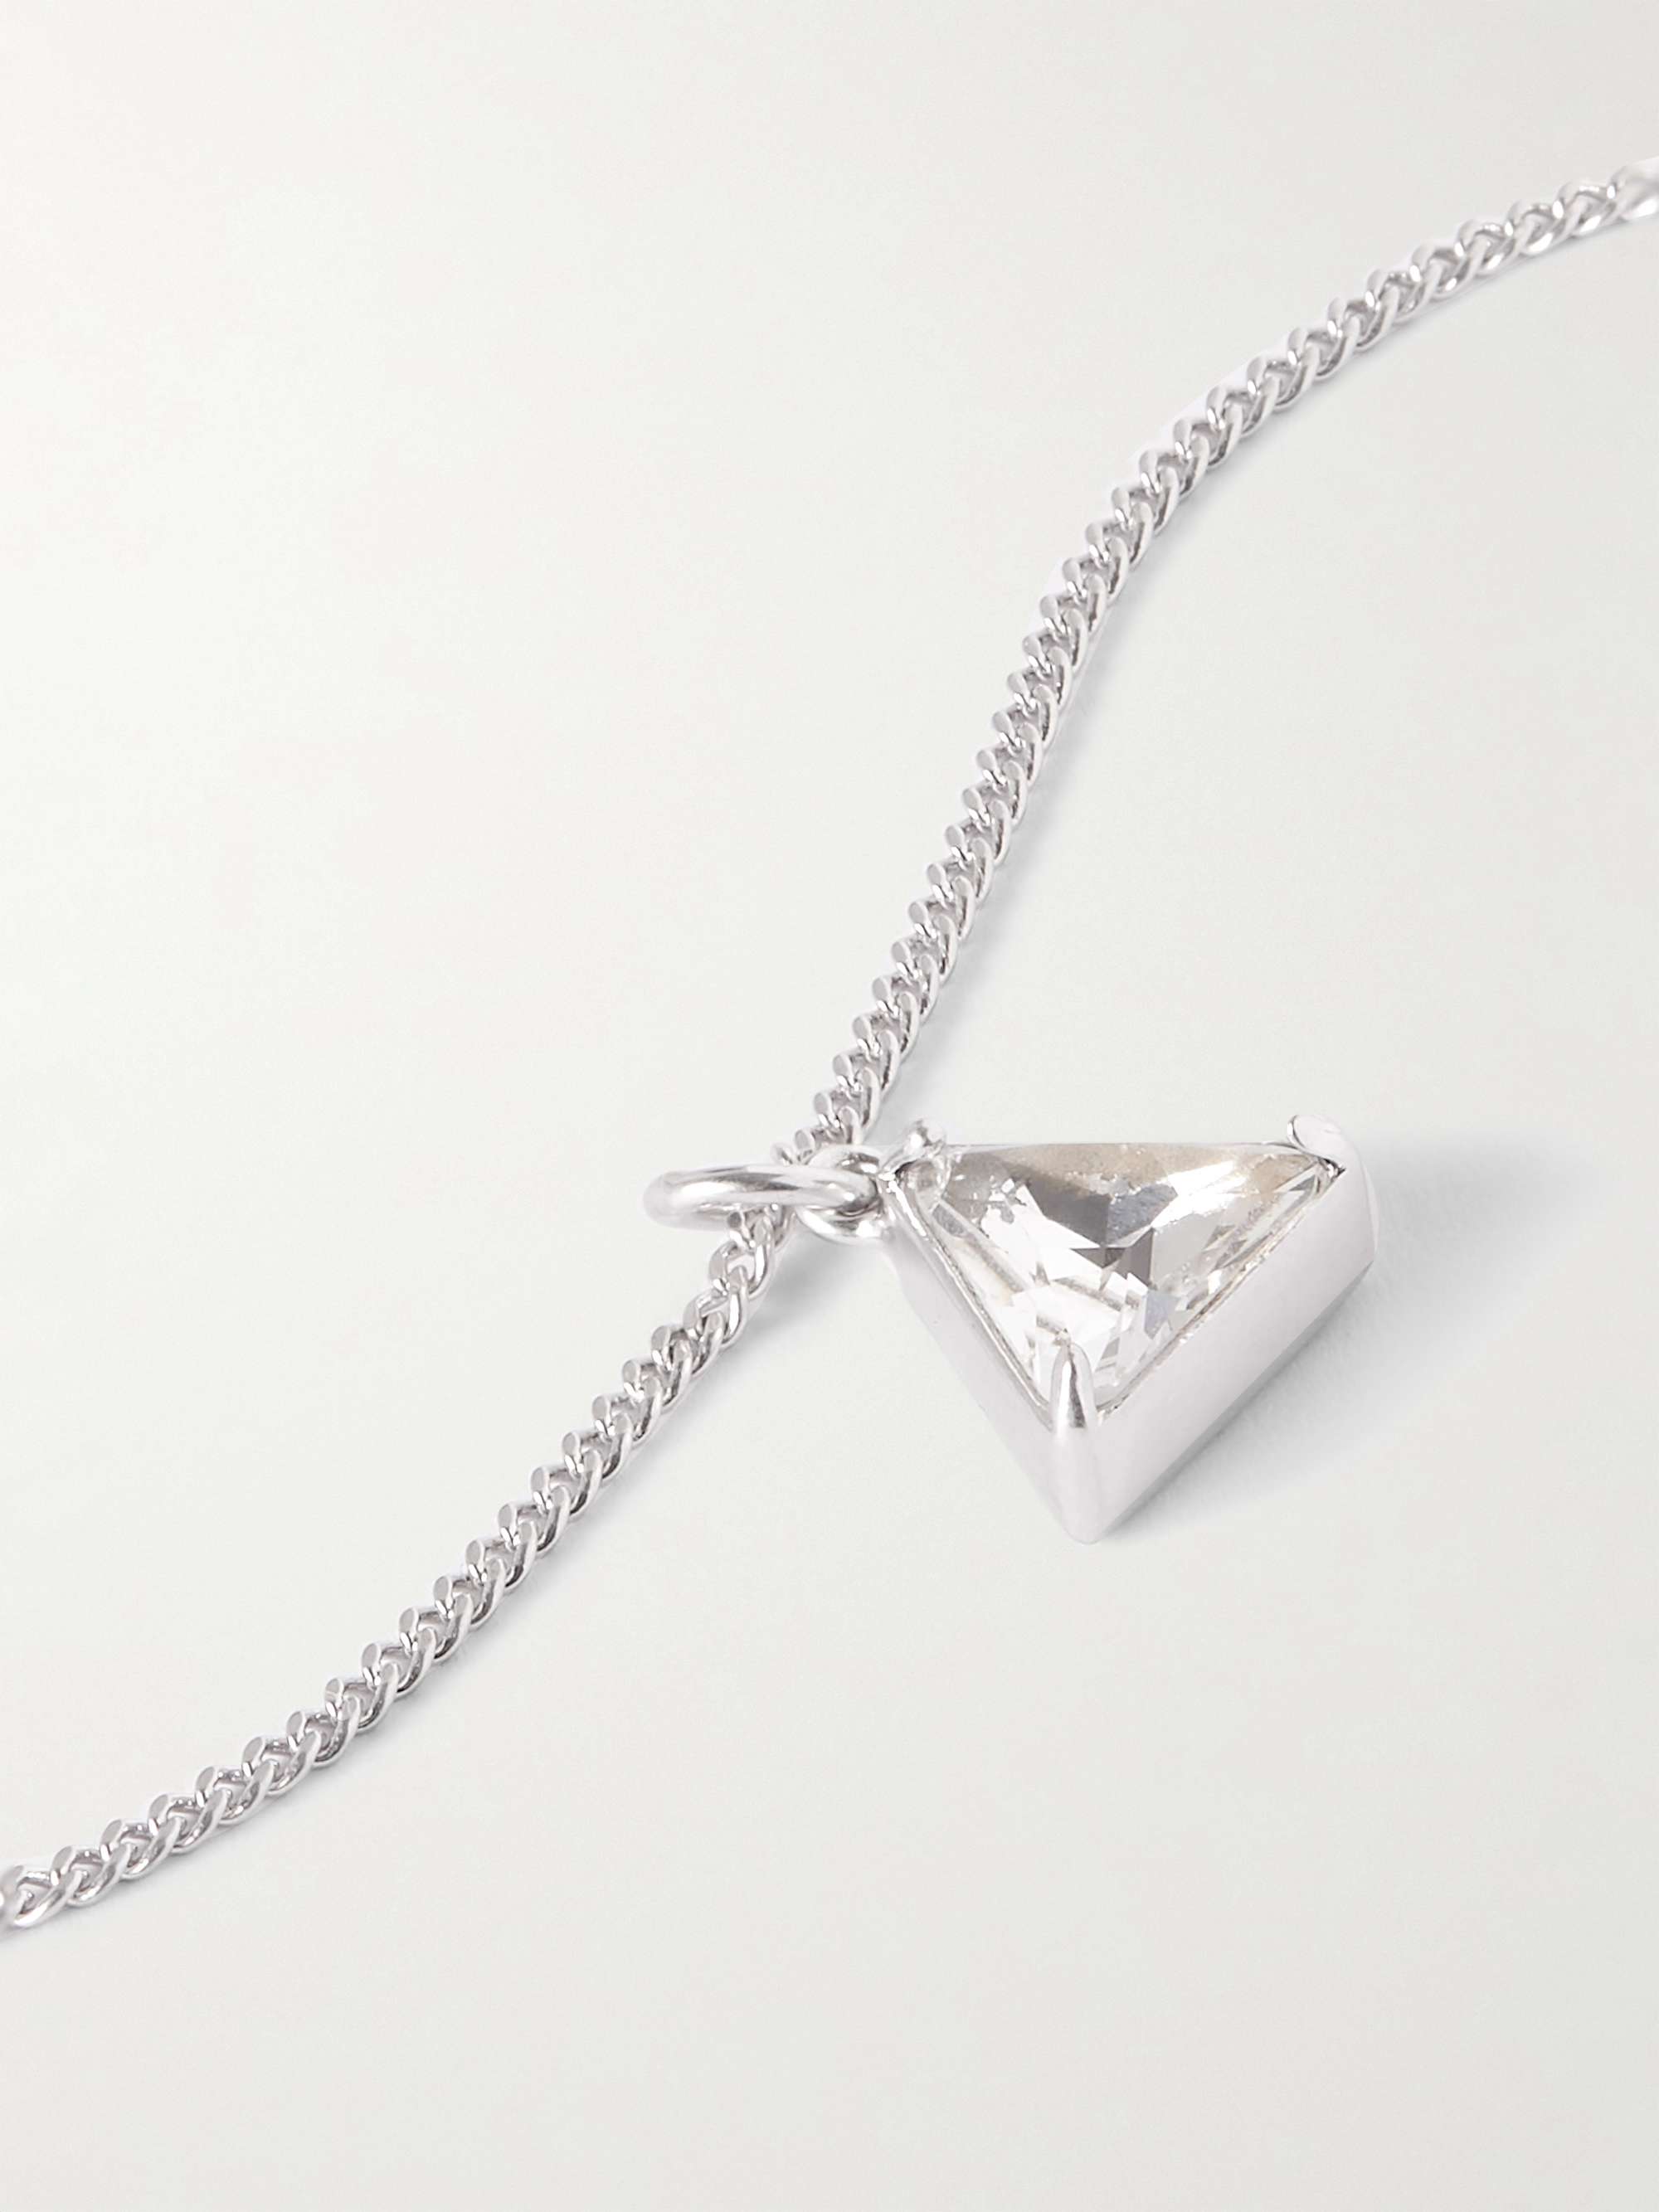 CELINE HOMME Silver-Tone Crystal Pendant Necklace